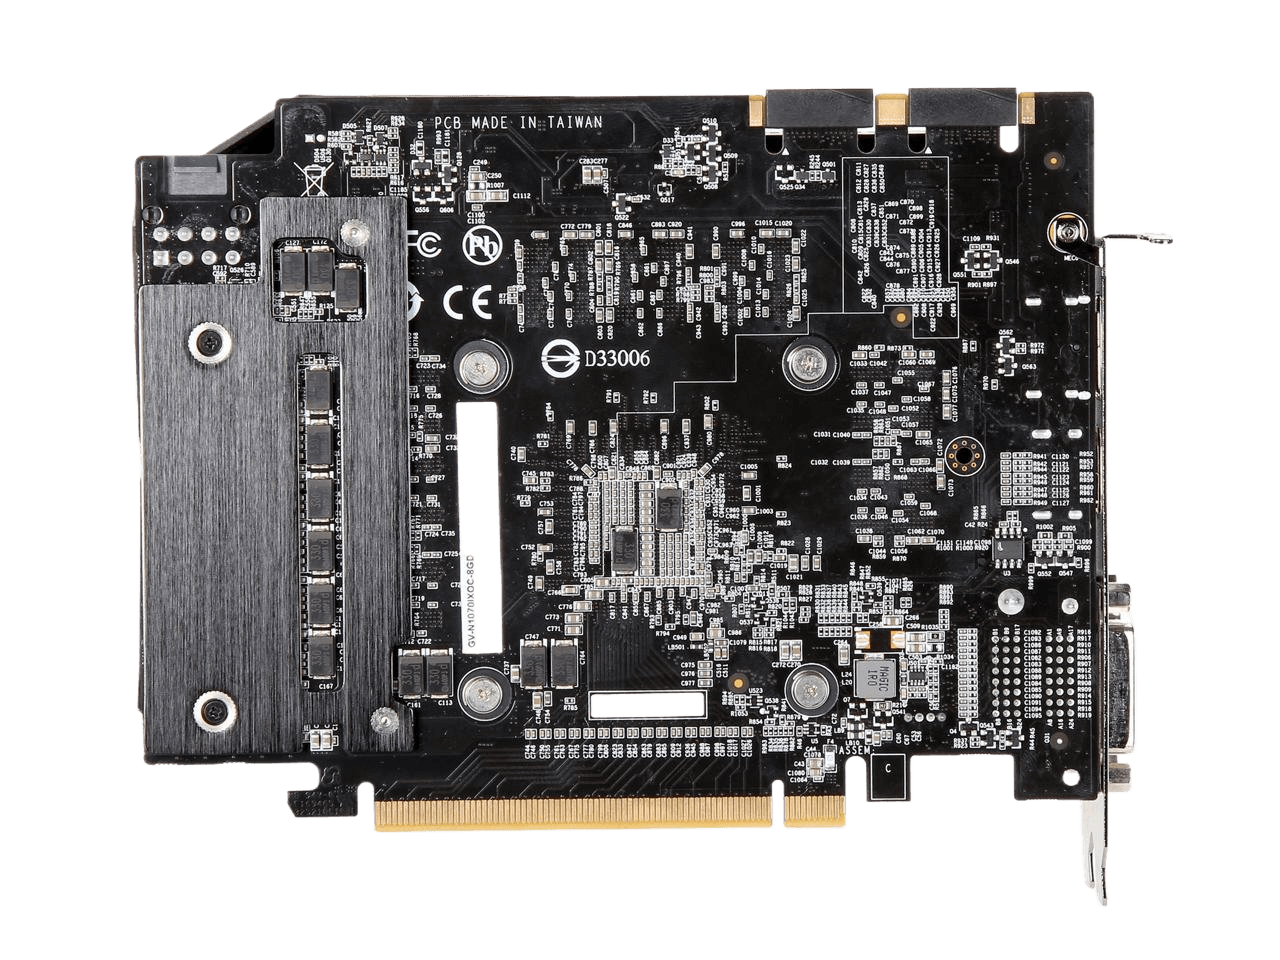 GIGABYTE GeForce GTX 1070 8GB GDDR5 PCI Express 3.0 x16 SLI Support ATX Video Card GV-N1070IXOC-8GD